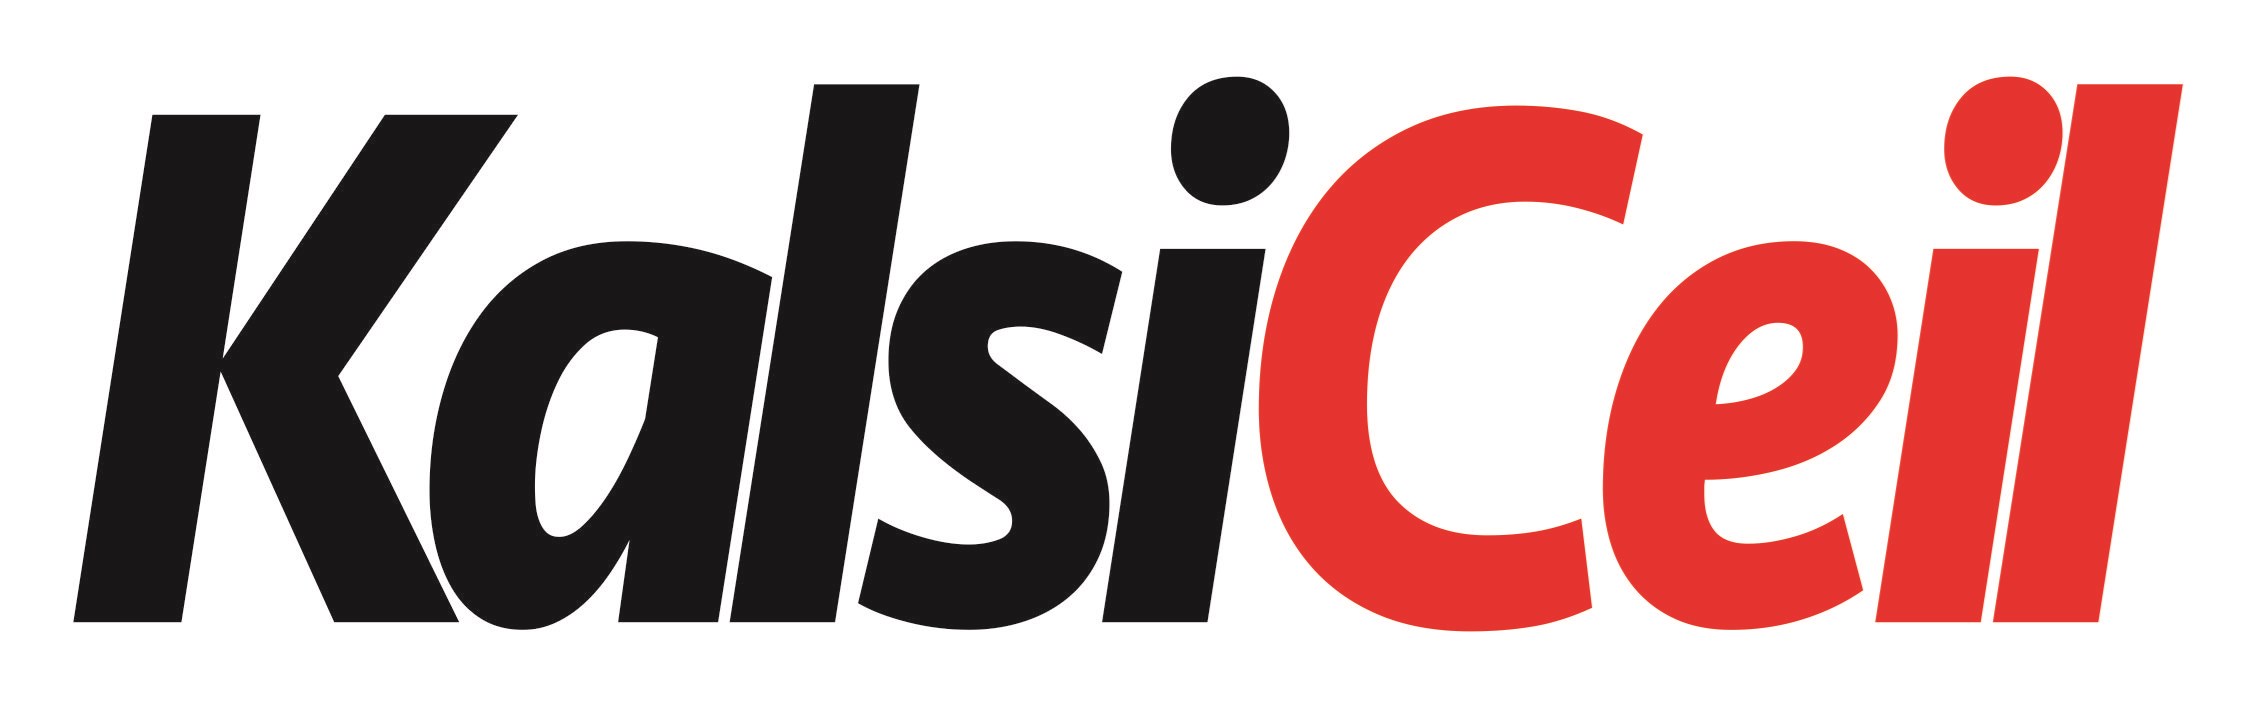 New KalsiCeil logo.jpg